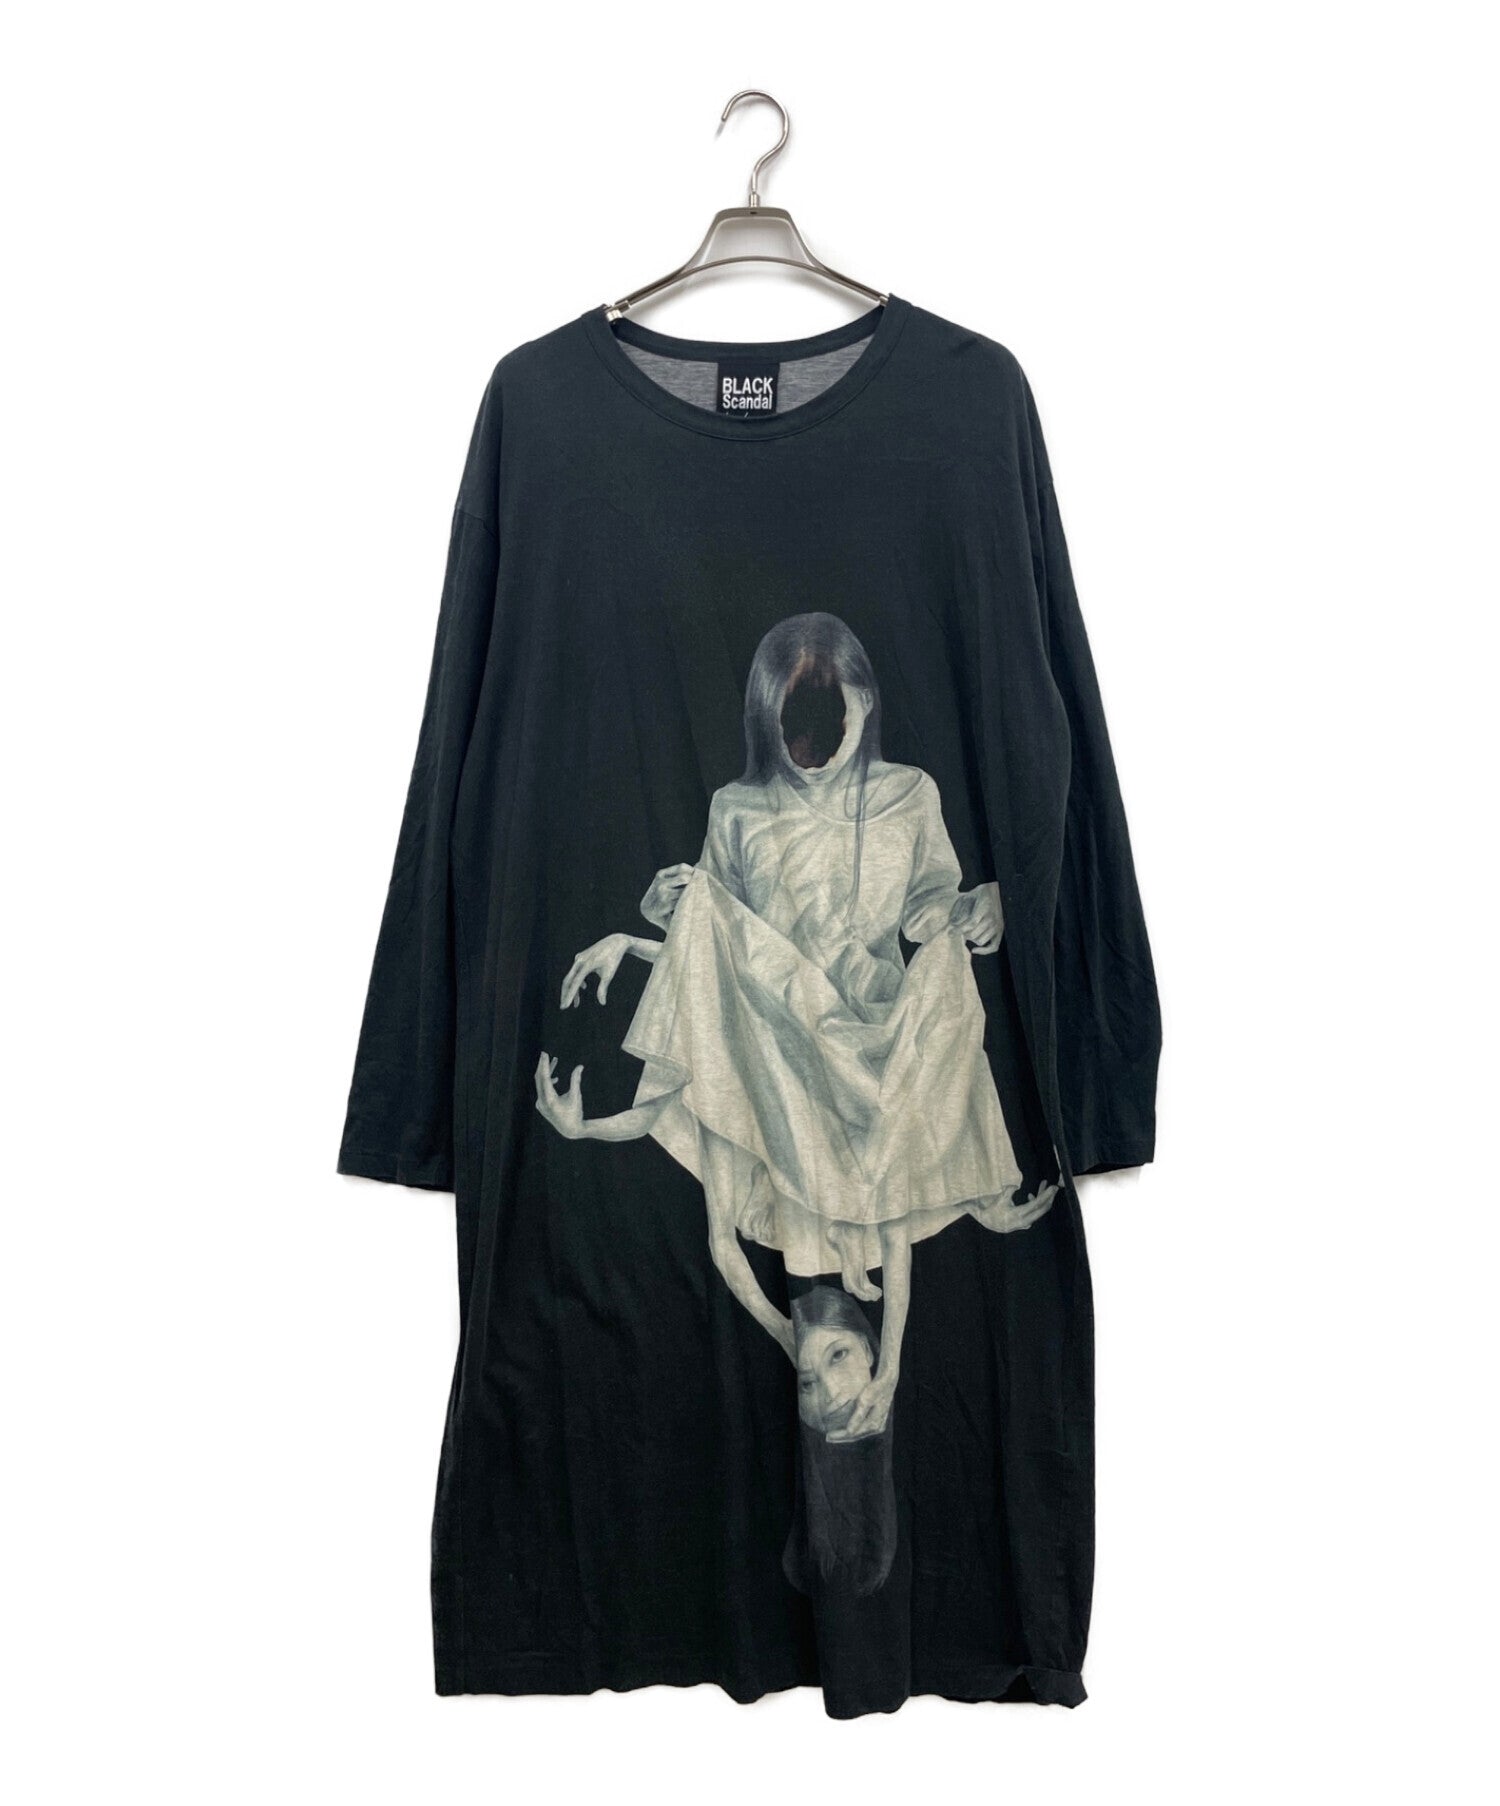 BLACK Scandal Yohji Yamamoto UCHIDA Print Long sleeve Round neck T